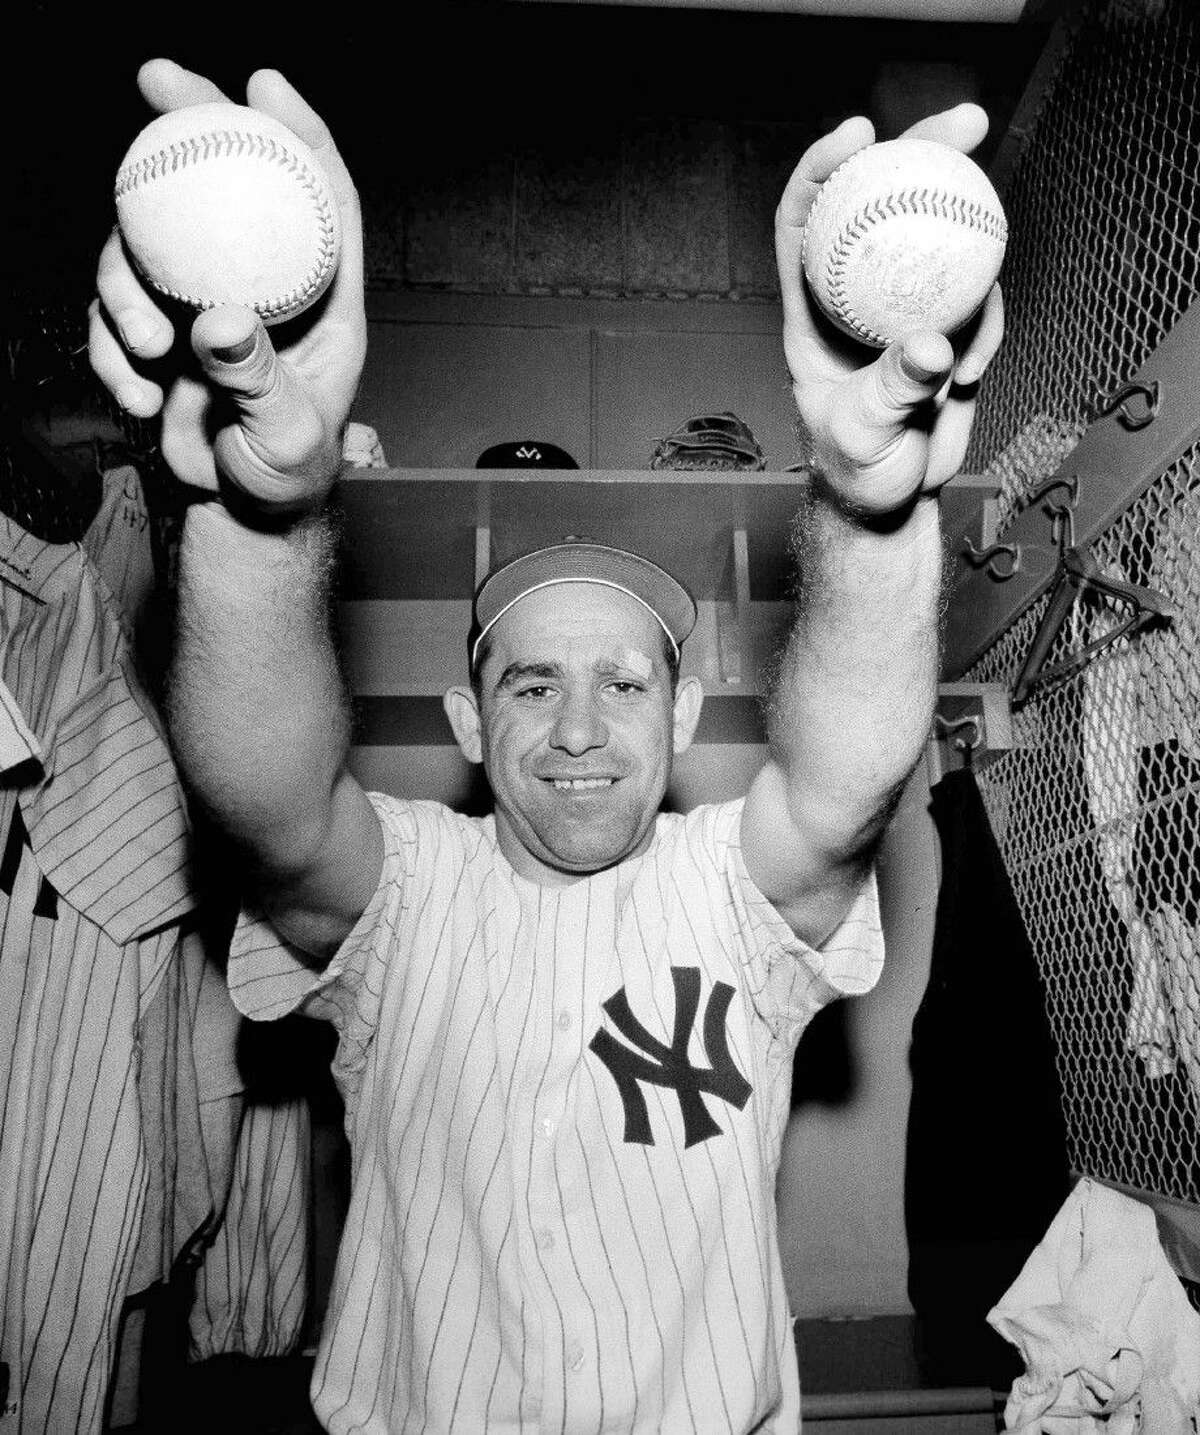 MLB: Yankees Hall of Fame catcher Yogi Berra dies at 90